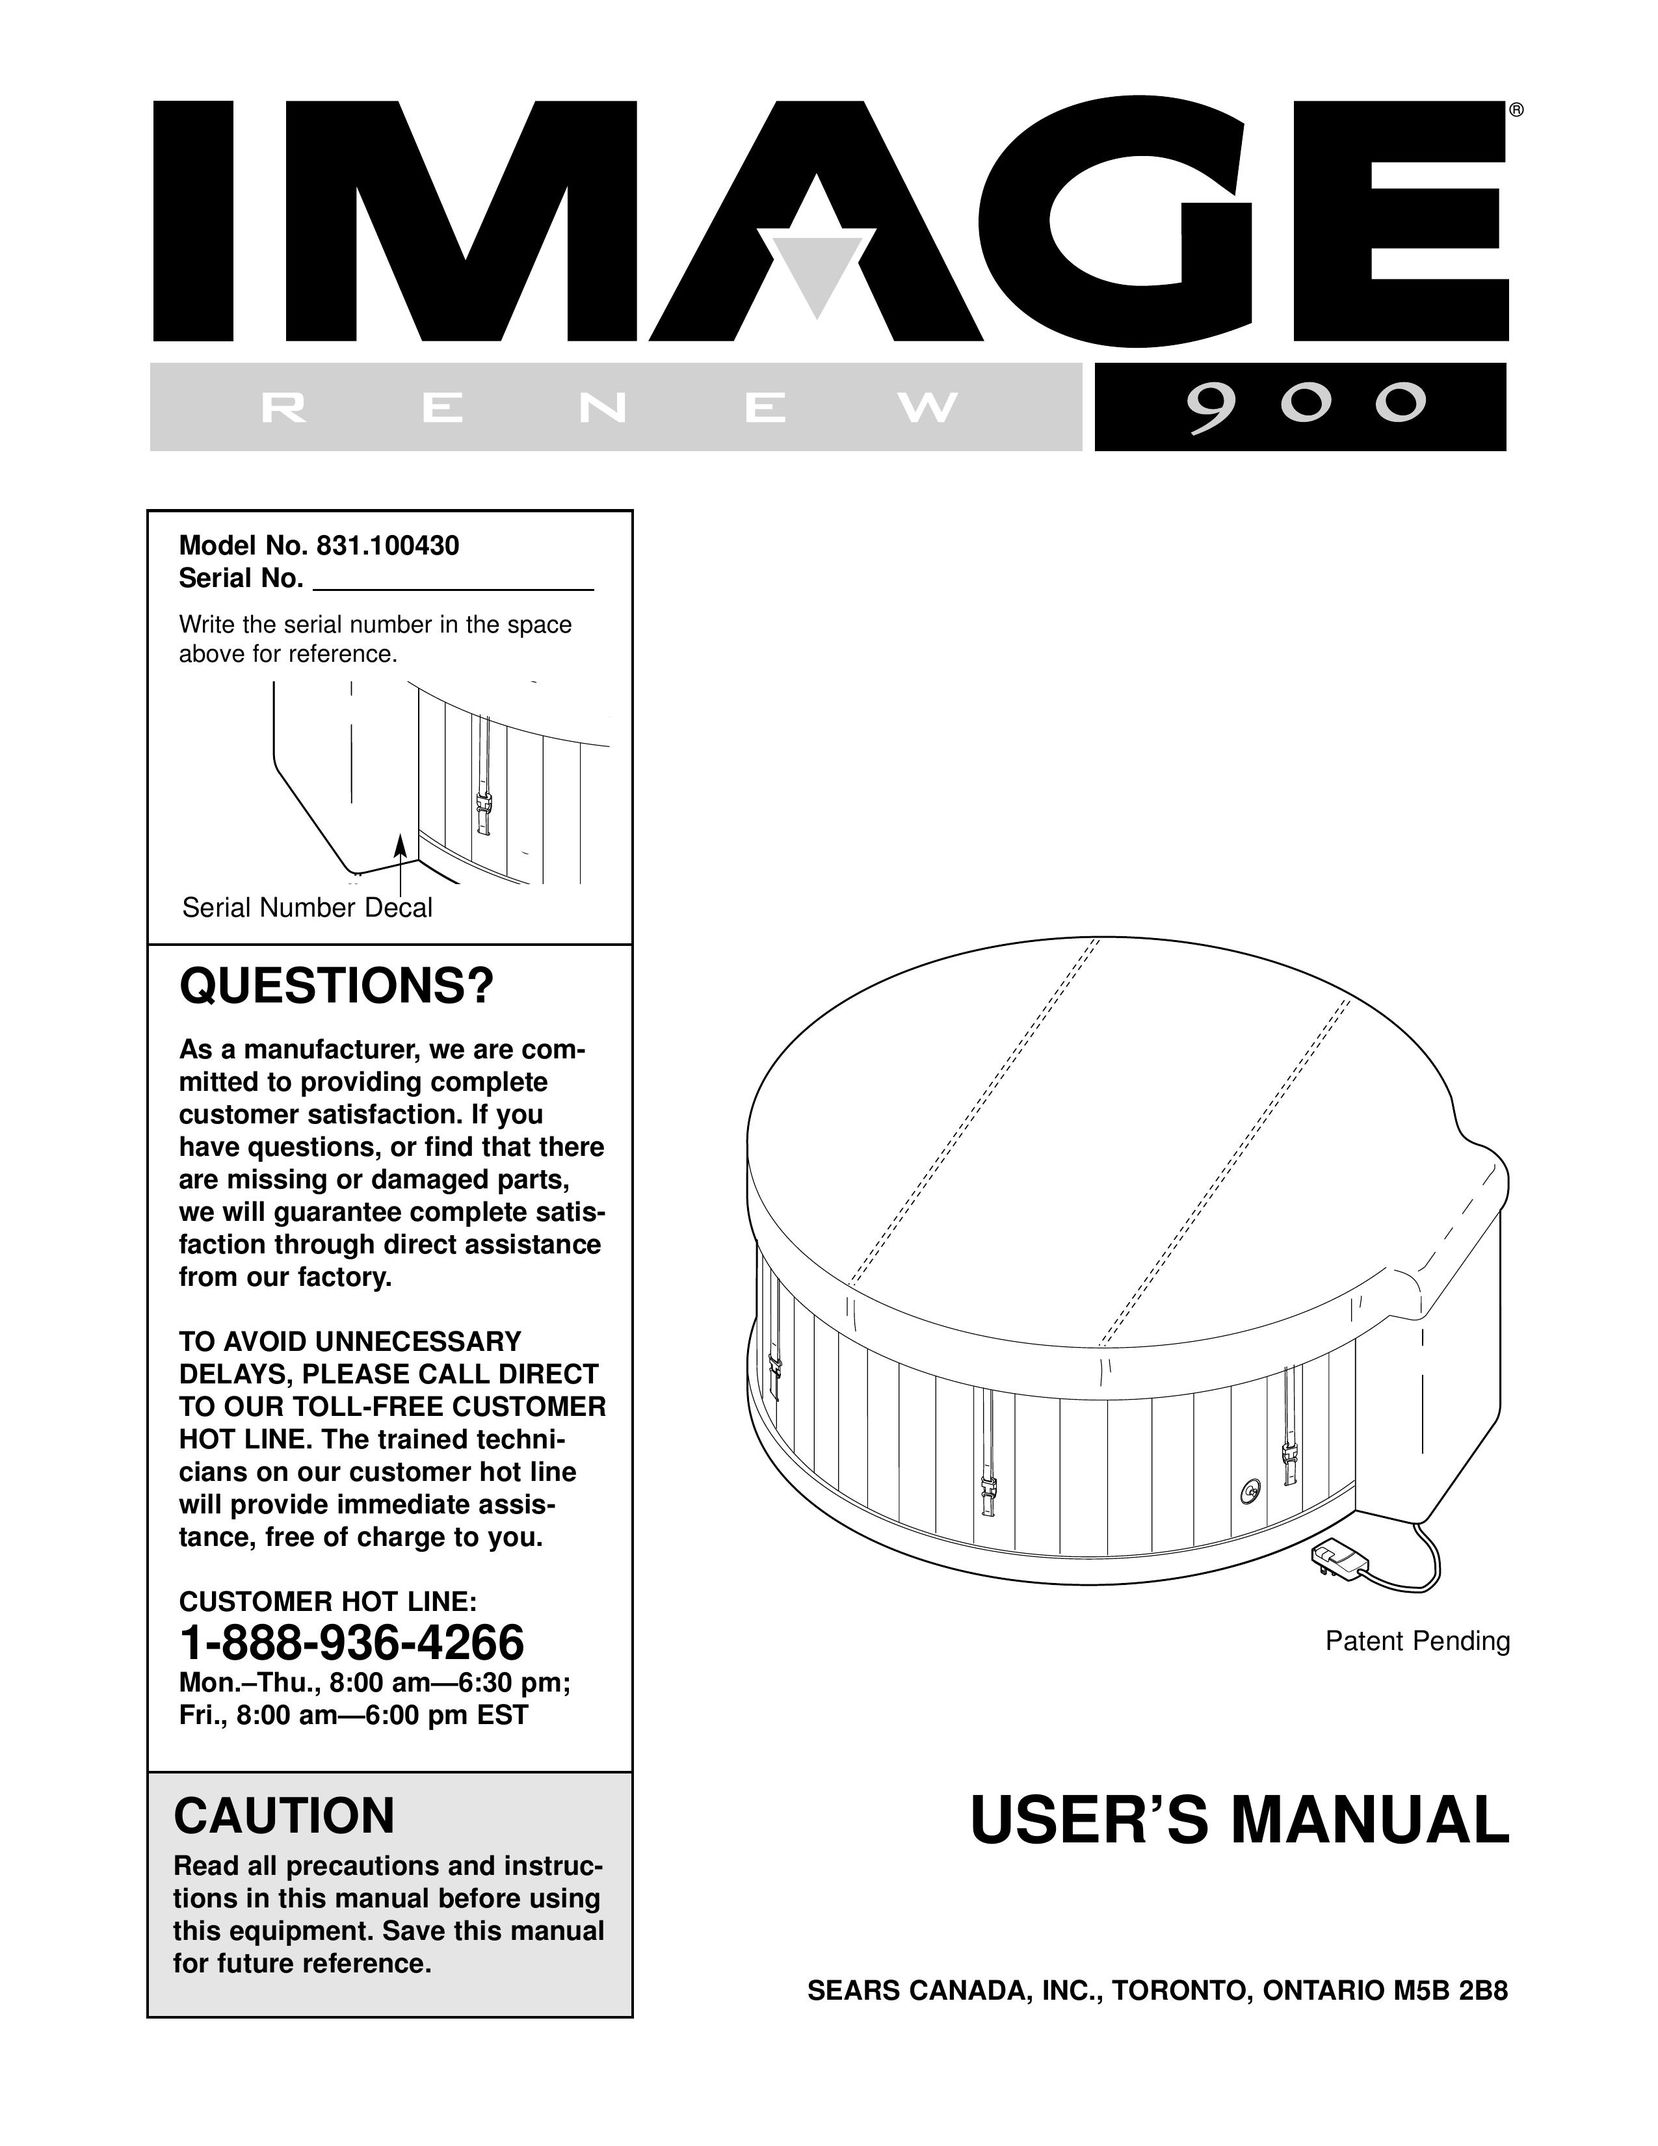 Image 831.100430 Home Gym User Manual